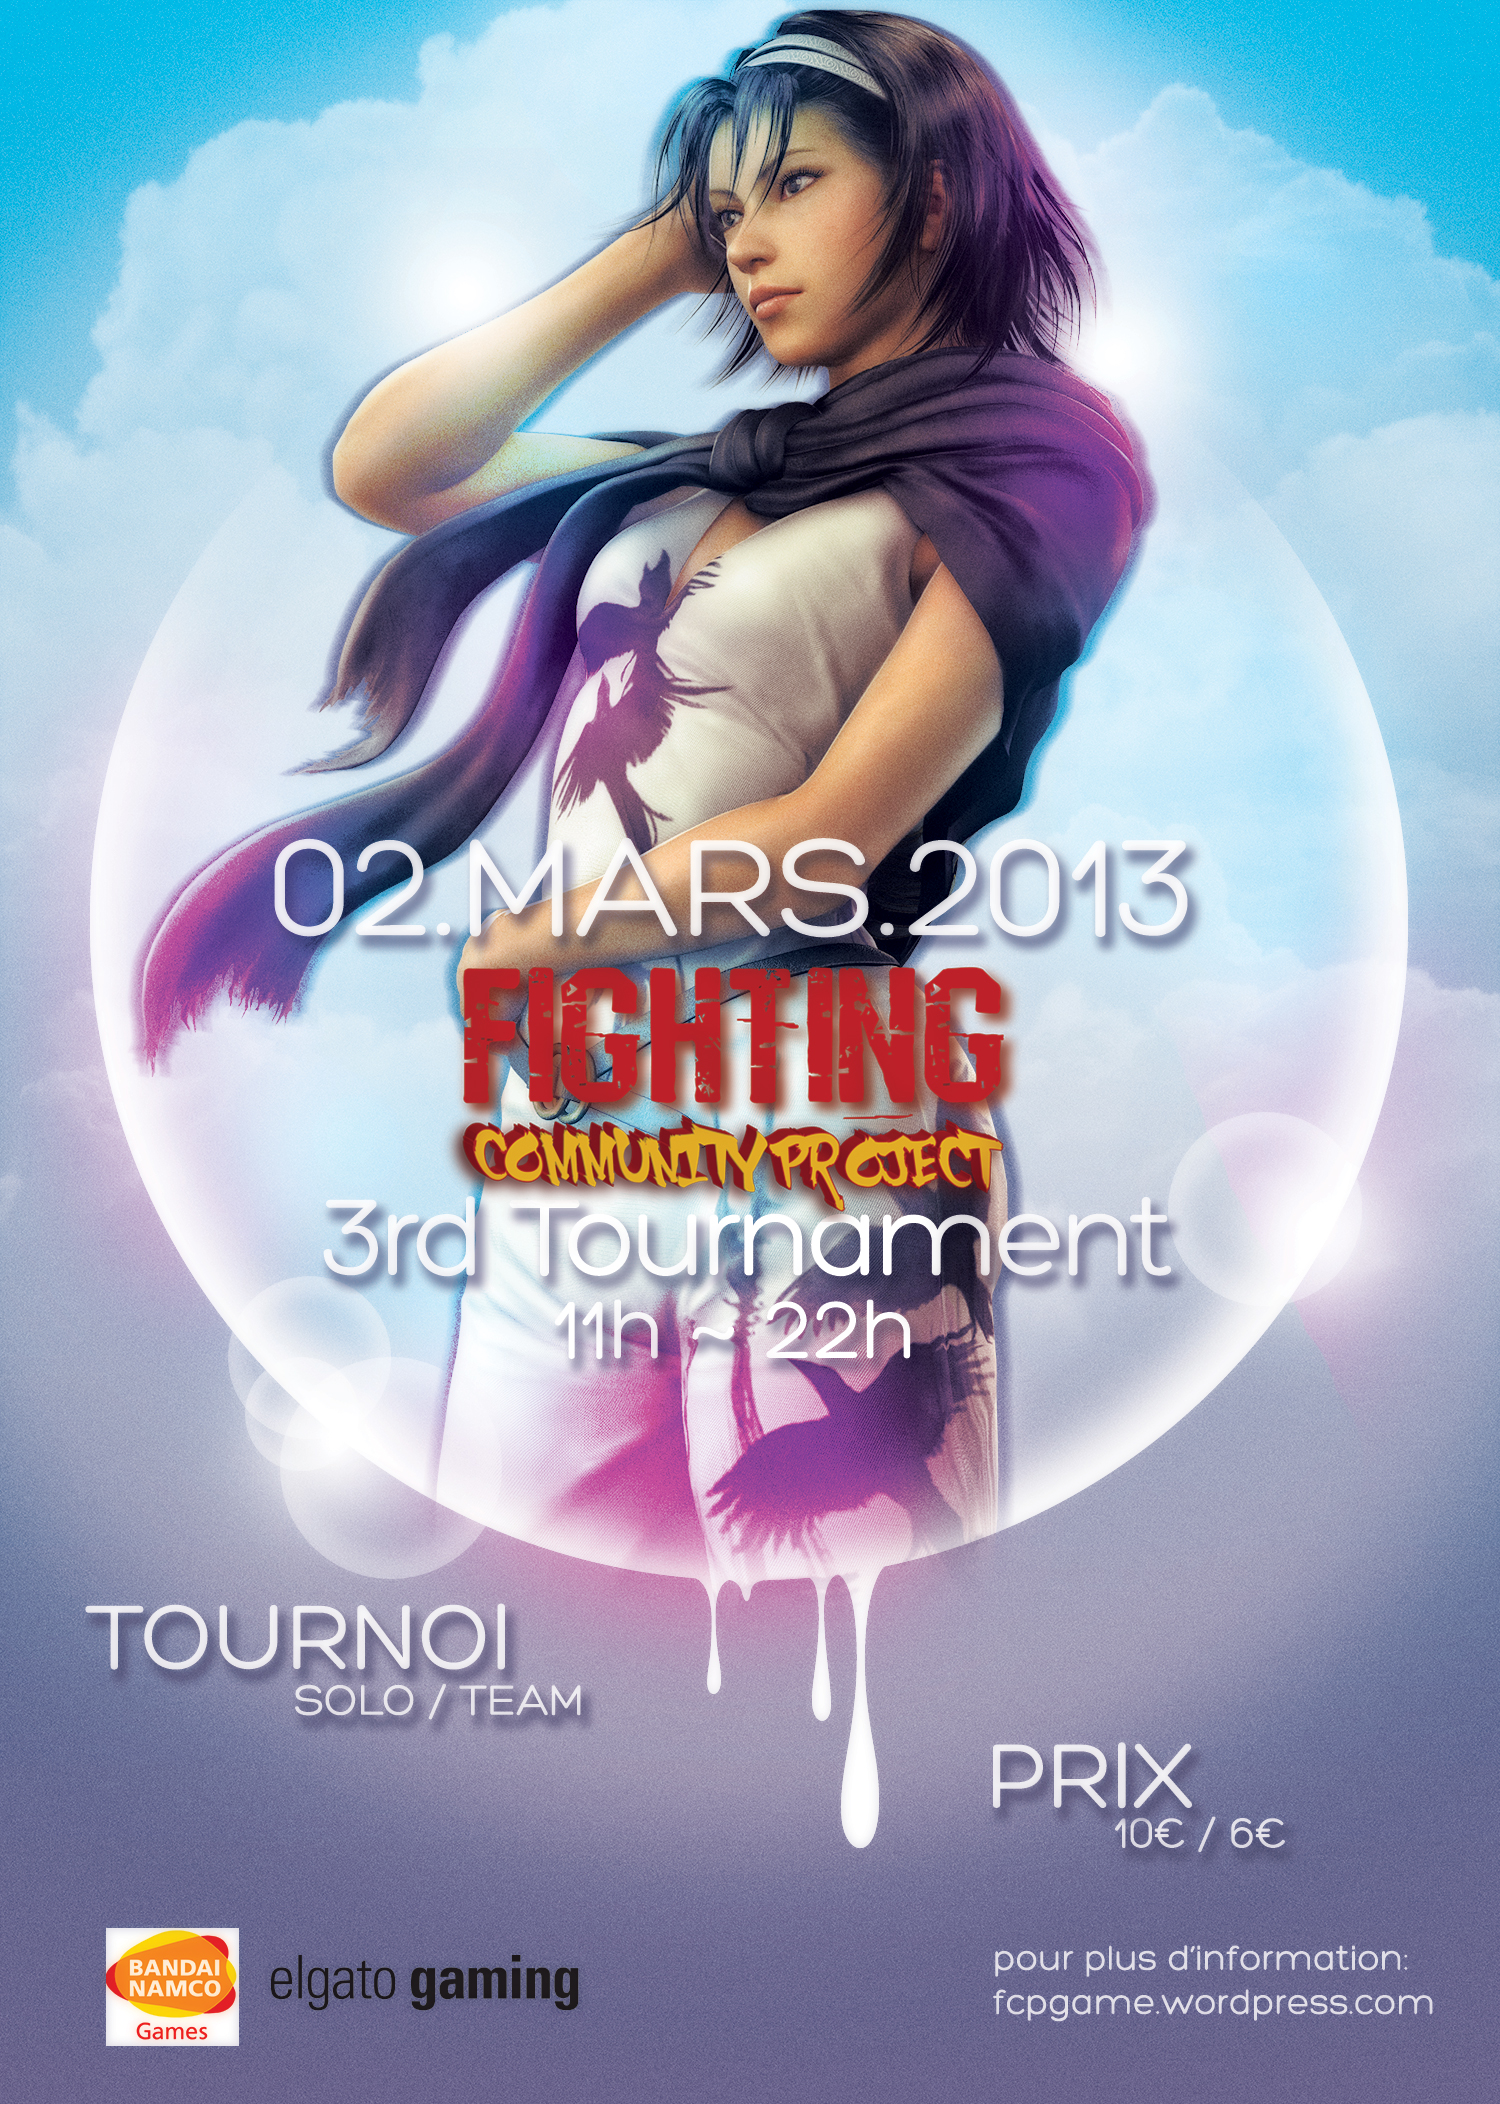 Fighting Community Project #3, [02/03/2013,Paris]